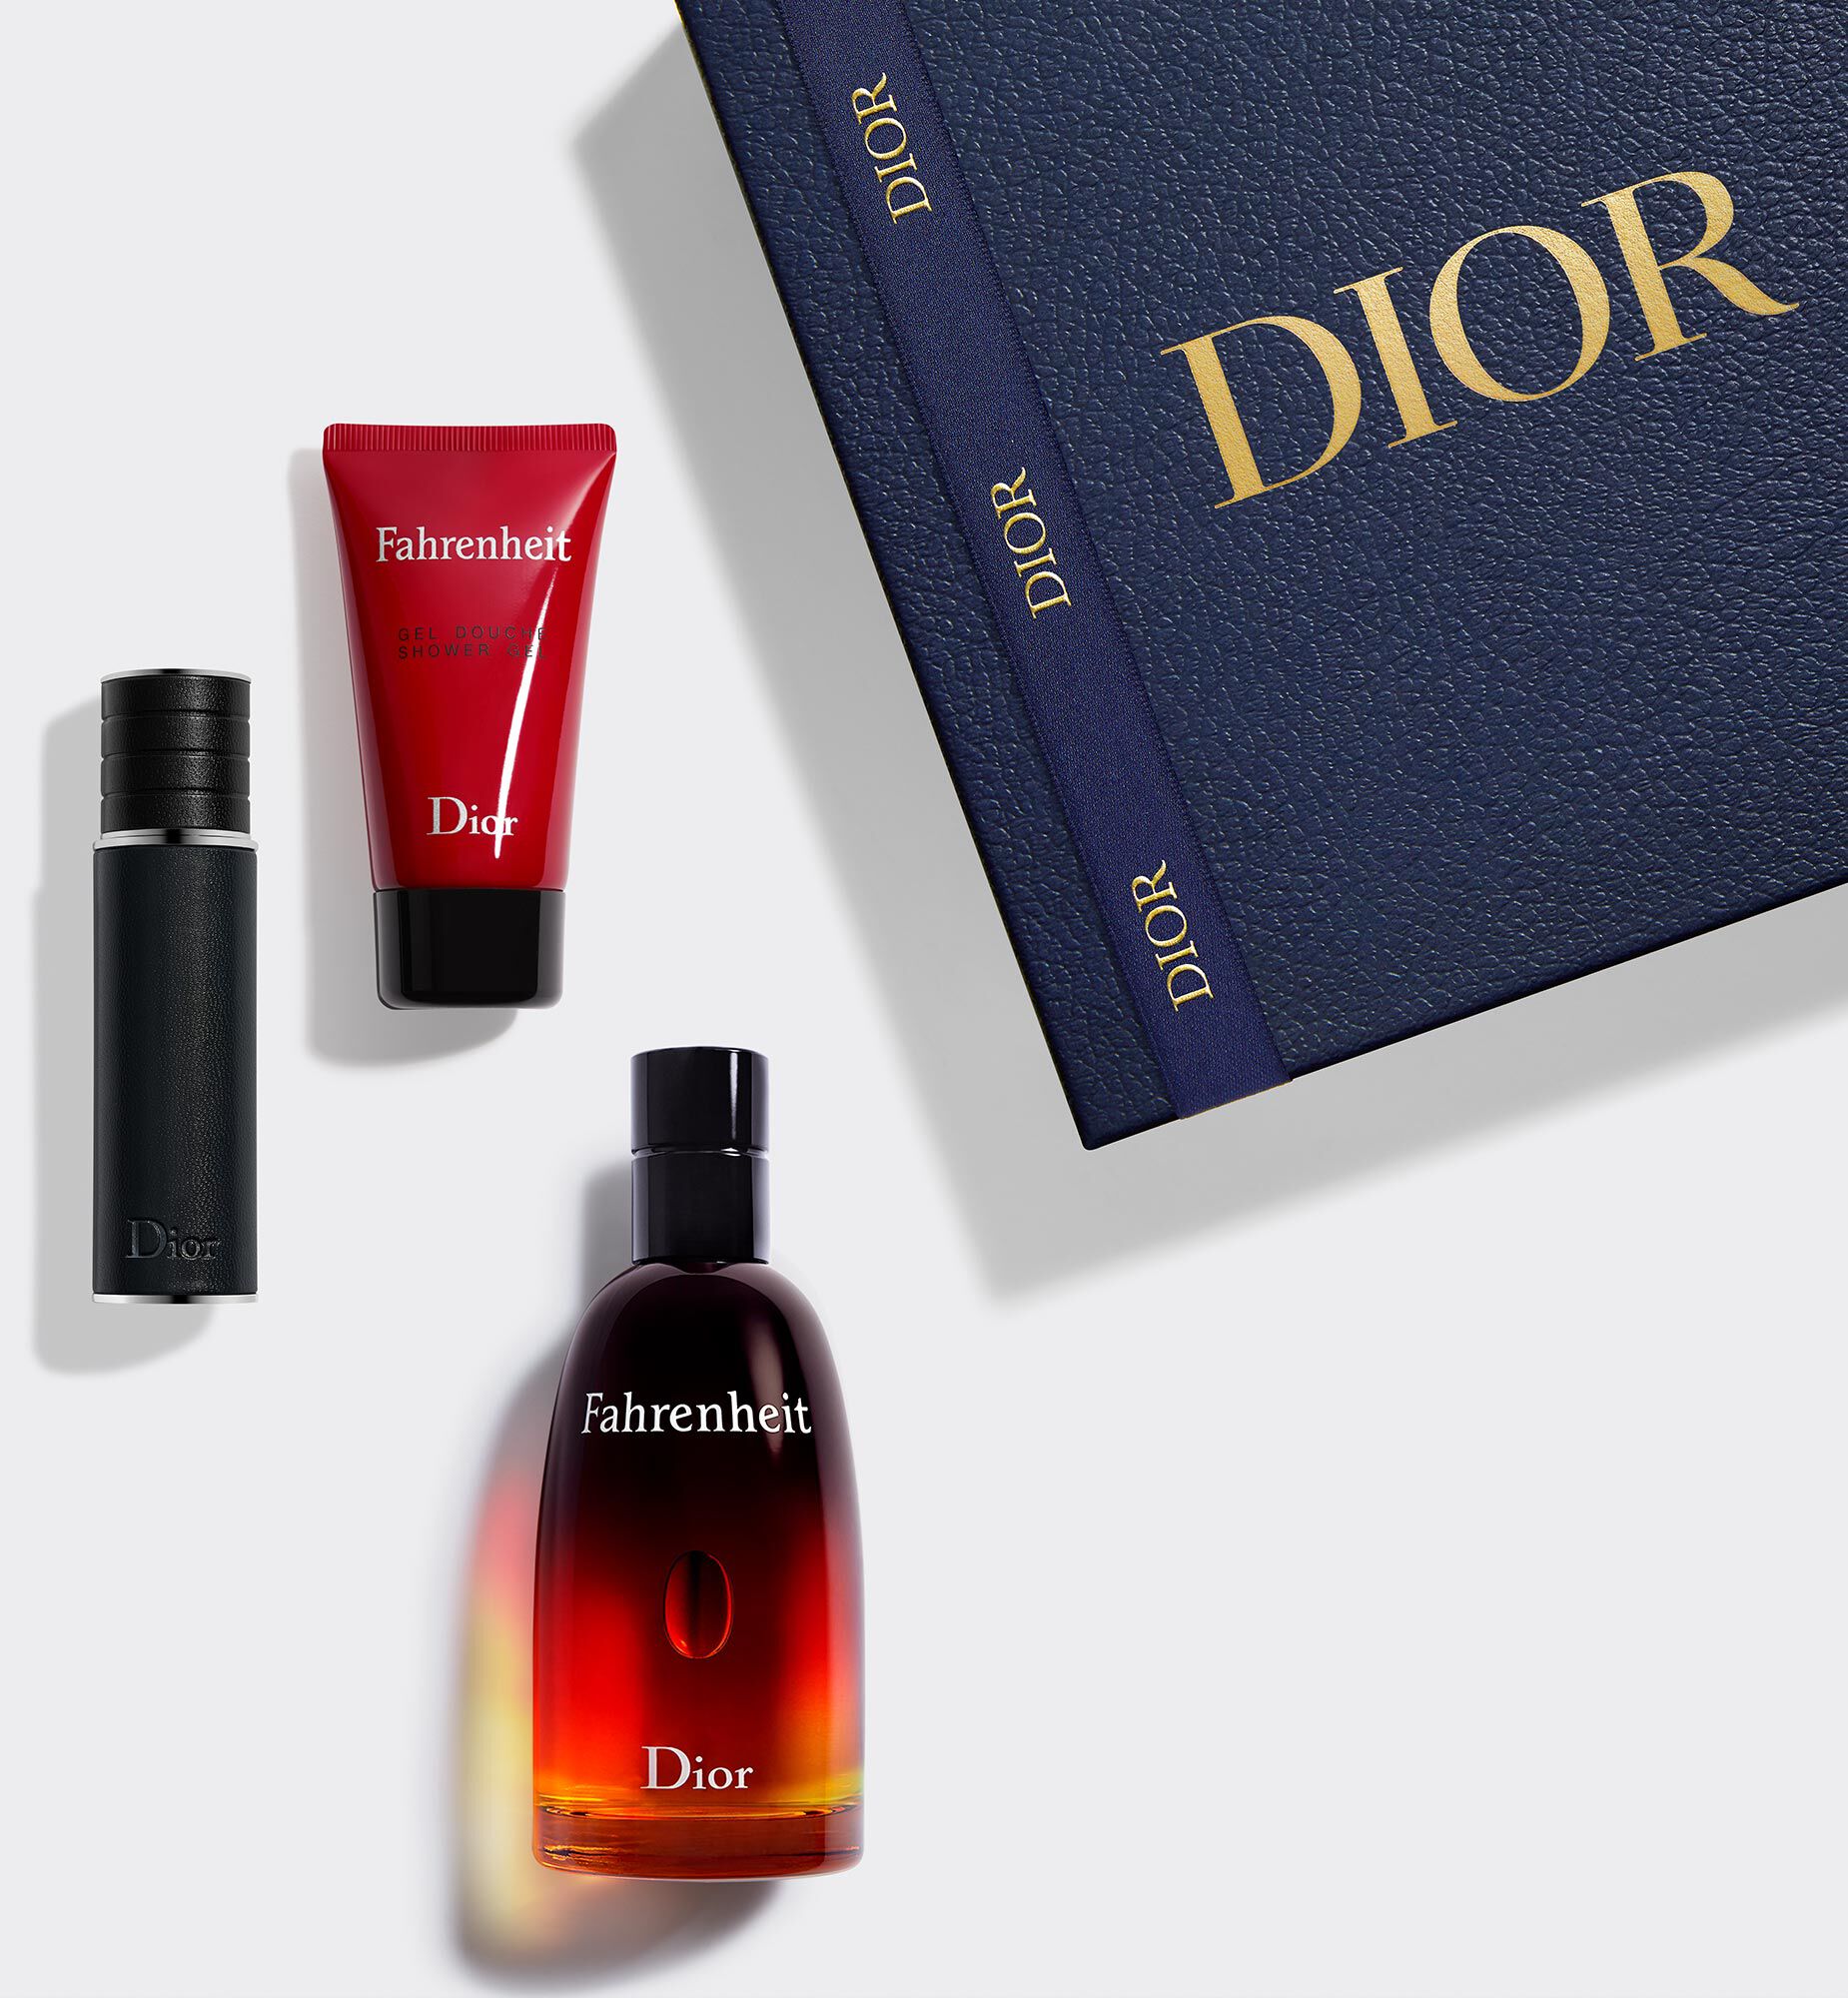 Mua Christian Dior Fahrenheit Eau de Toilette  50 ml trên Amazon Anh chính  hãng 2023  Giaonhan247